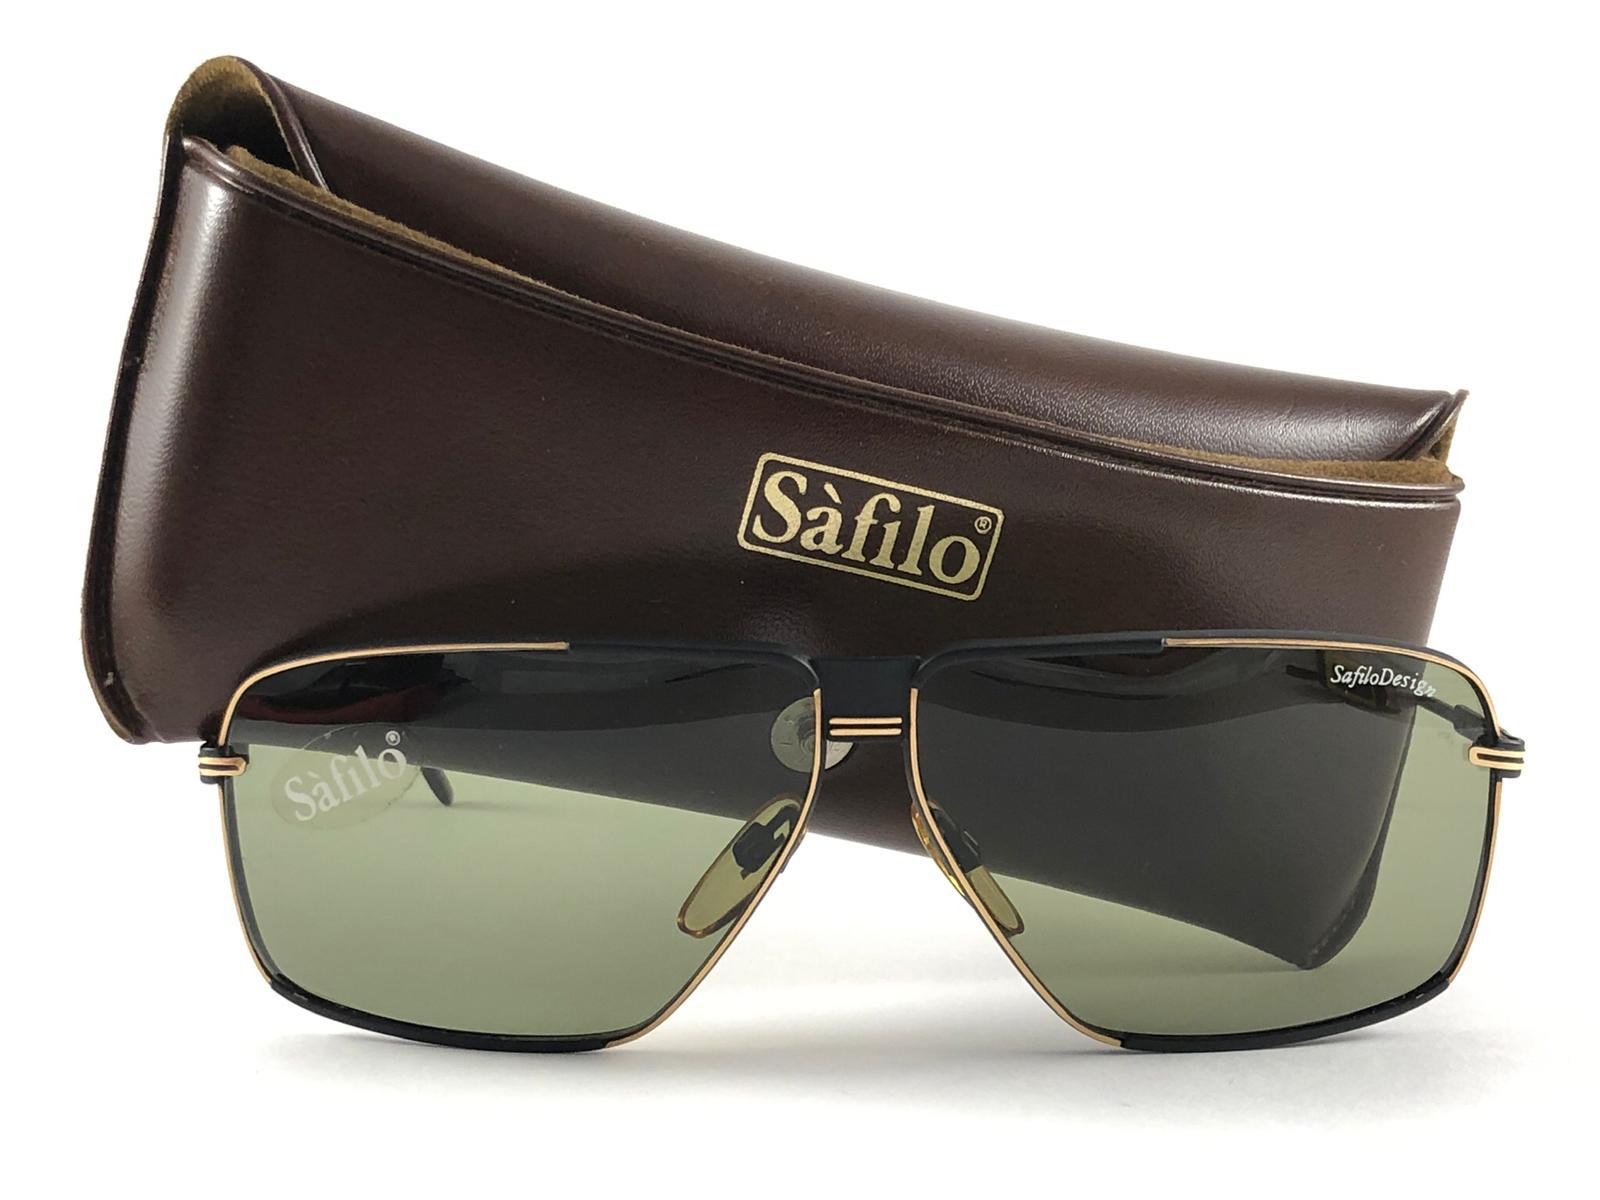 New Vintage Safilo Design 04 Black Mate Aviator 1980's Sunglasses Made in Italy For Sale 1